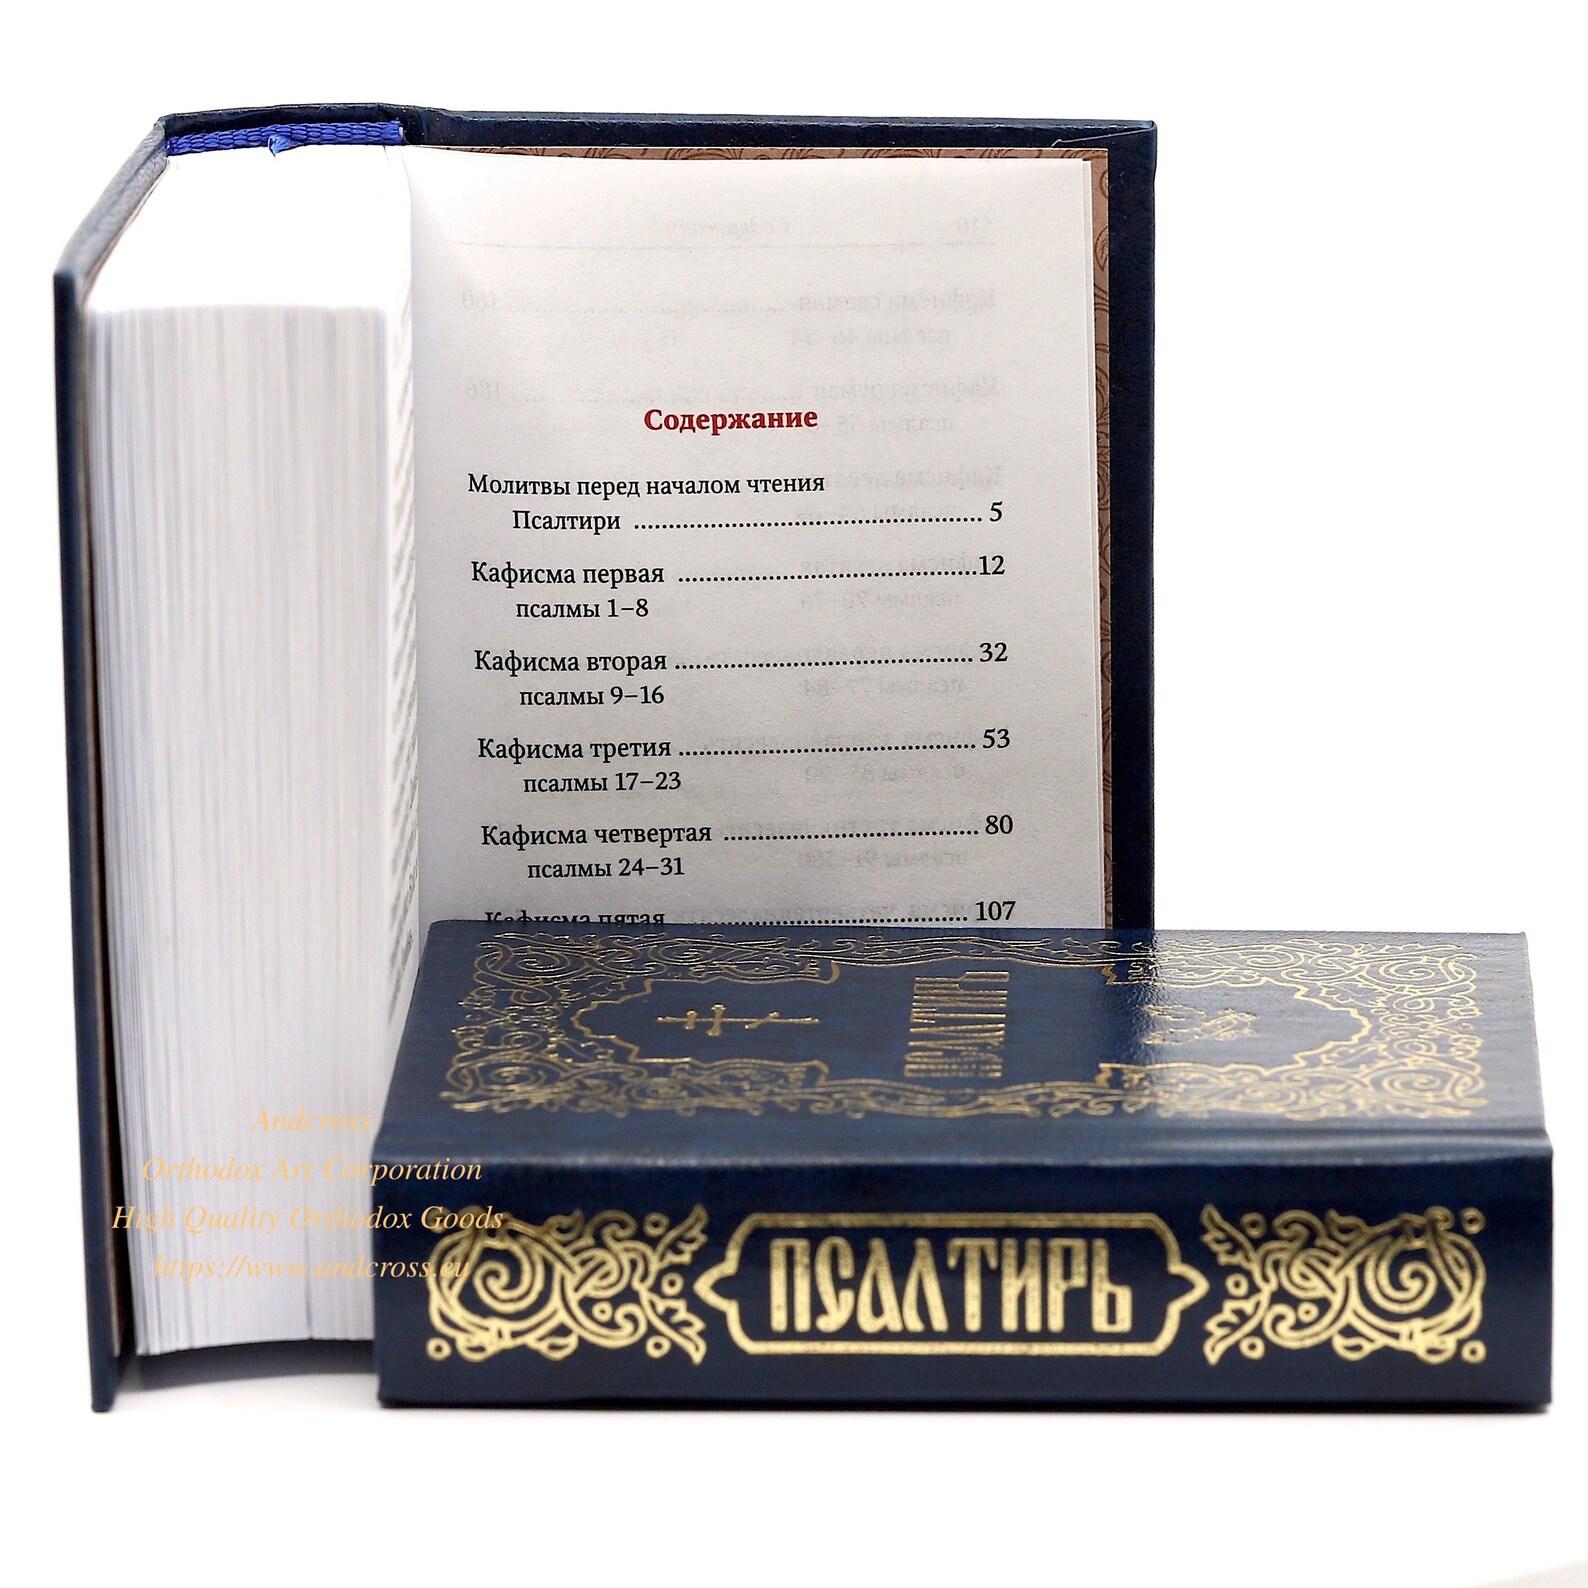 Orthodox Pocket Book Of Psalms Russian Language